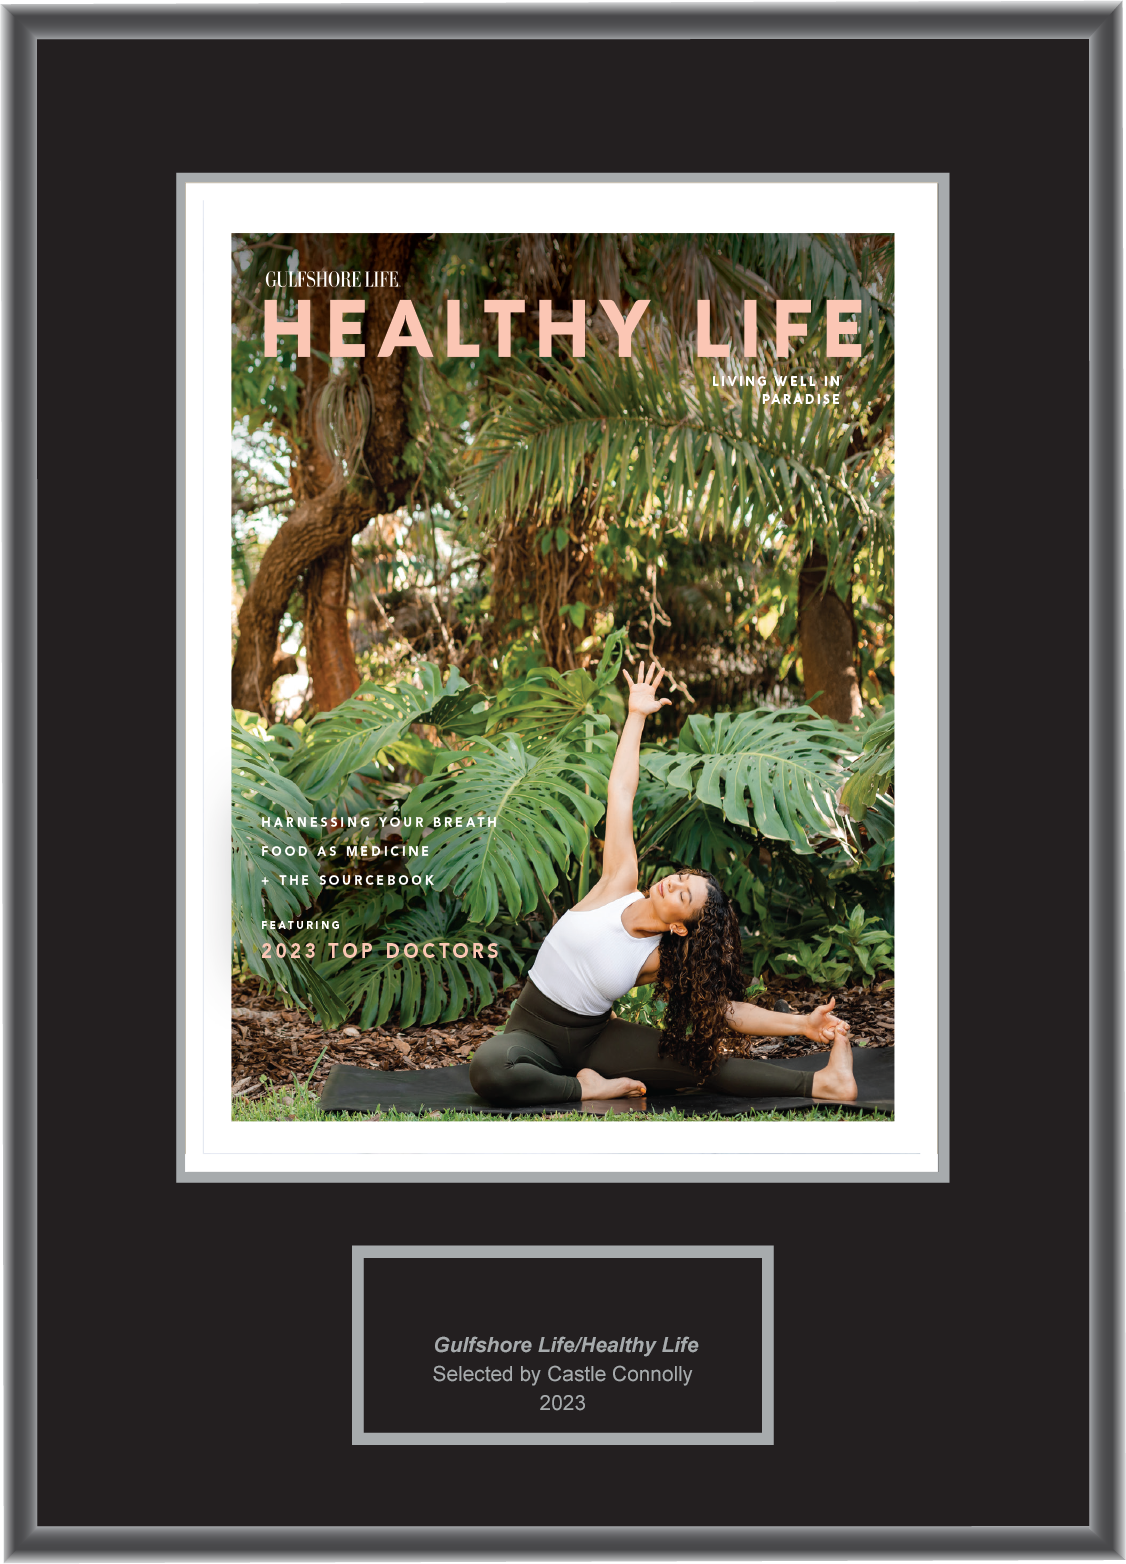 Gulfshore Life Healthy Life Magazine Top Doctors 2023 - Plaque